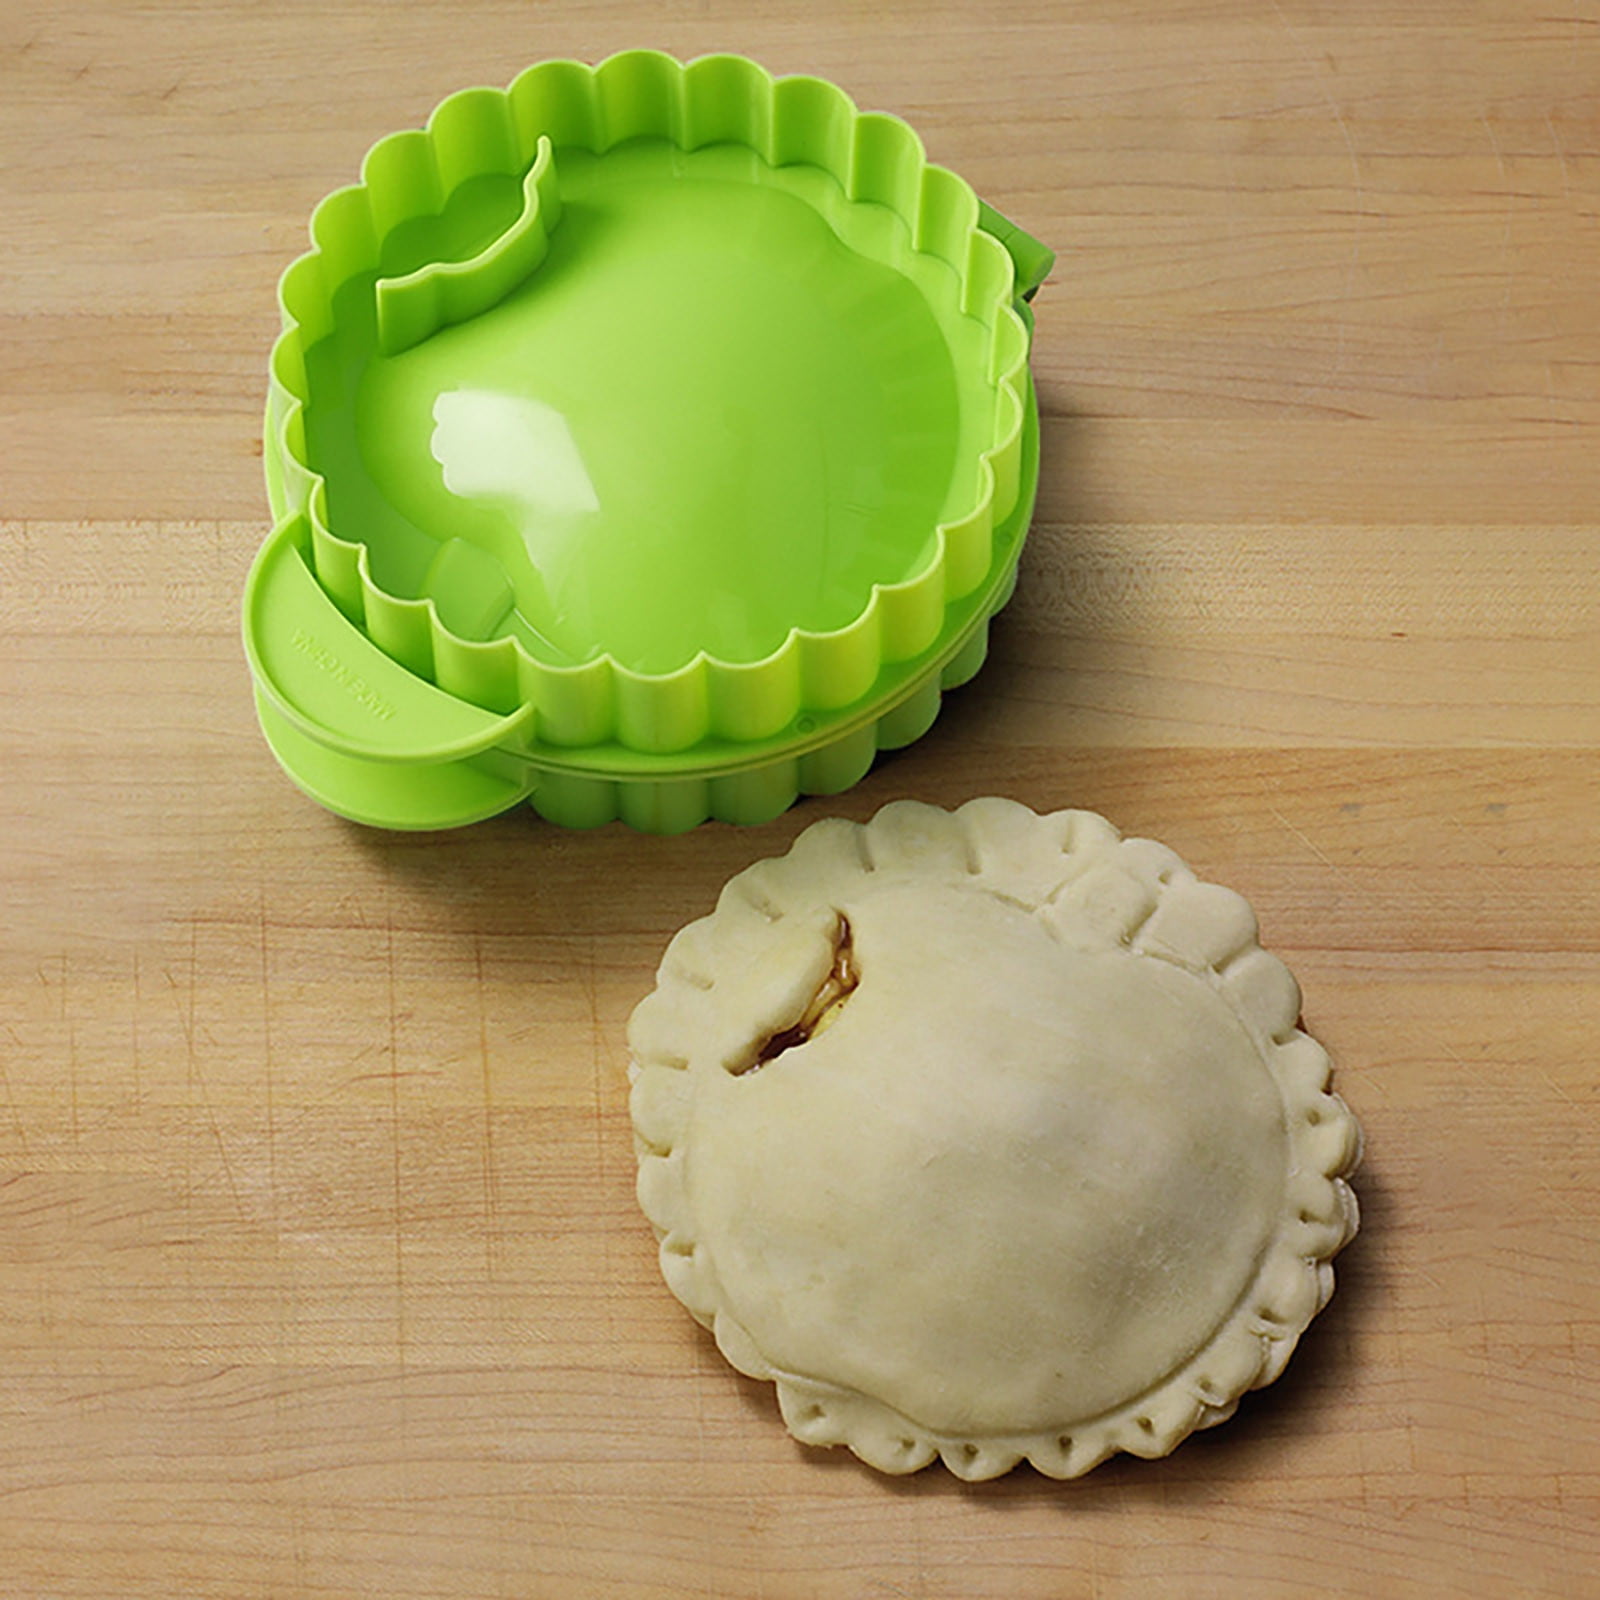  Halloween One-Press Hand Pie Maker, Party Potluck Mini Pie Maker,  Hand Pie Molds For Baking, Dough Presser Pocket Pie Molds, Apple, Pumpkin  and Acorn Shapes (Apple): Home & Kitchen